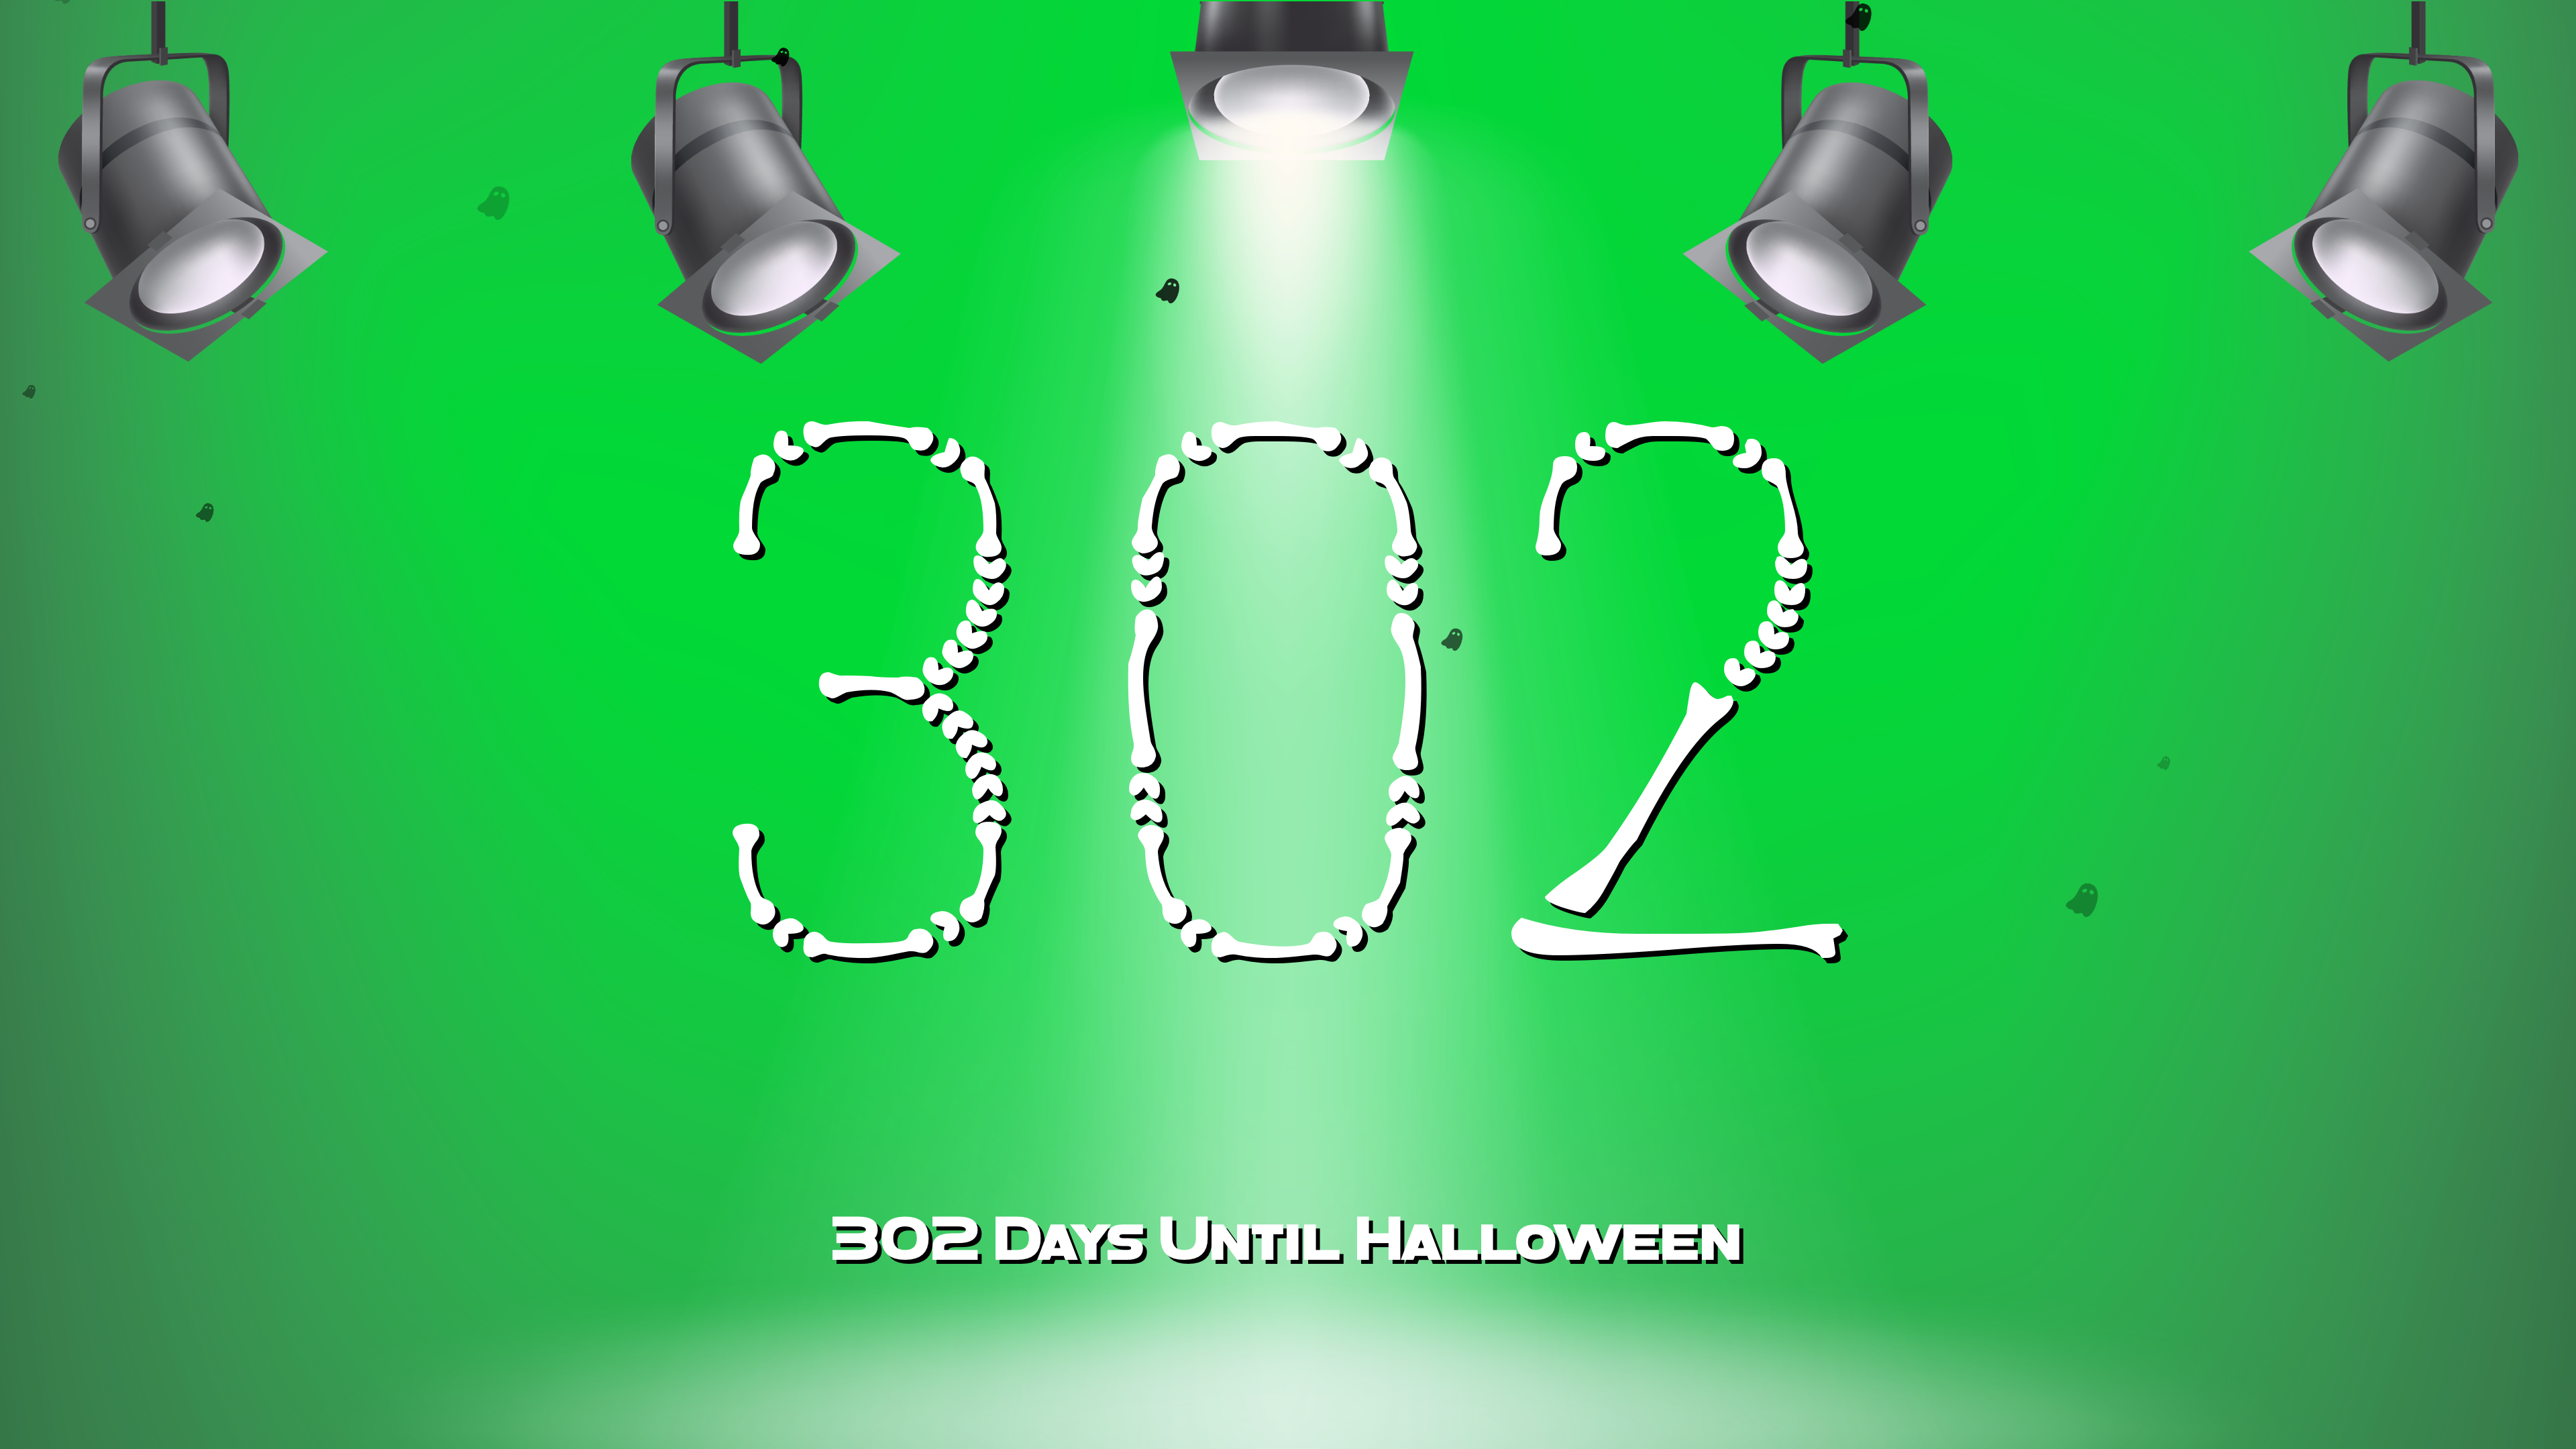 Countdown to Halloween screenshot 13